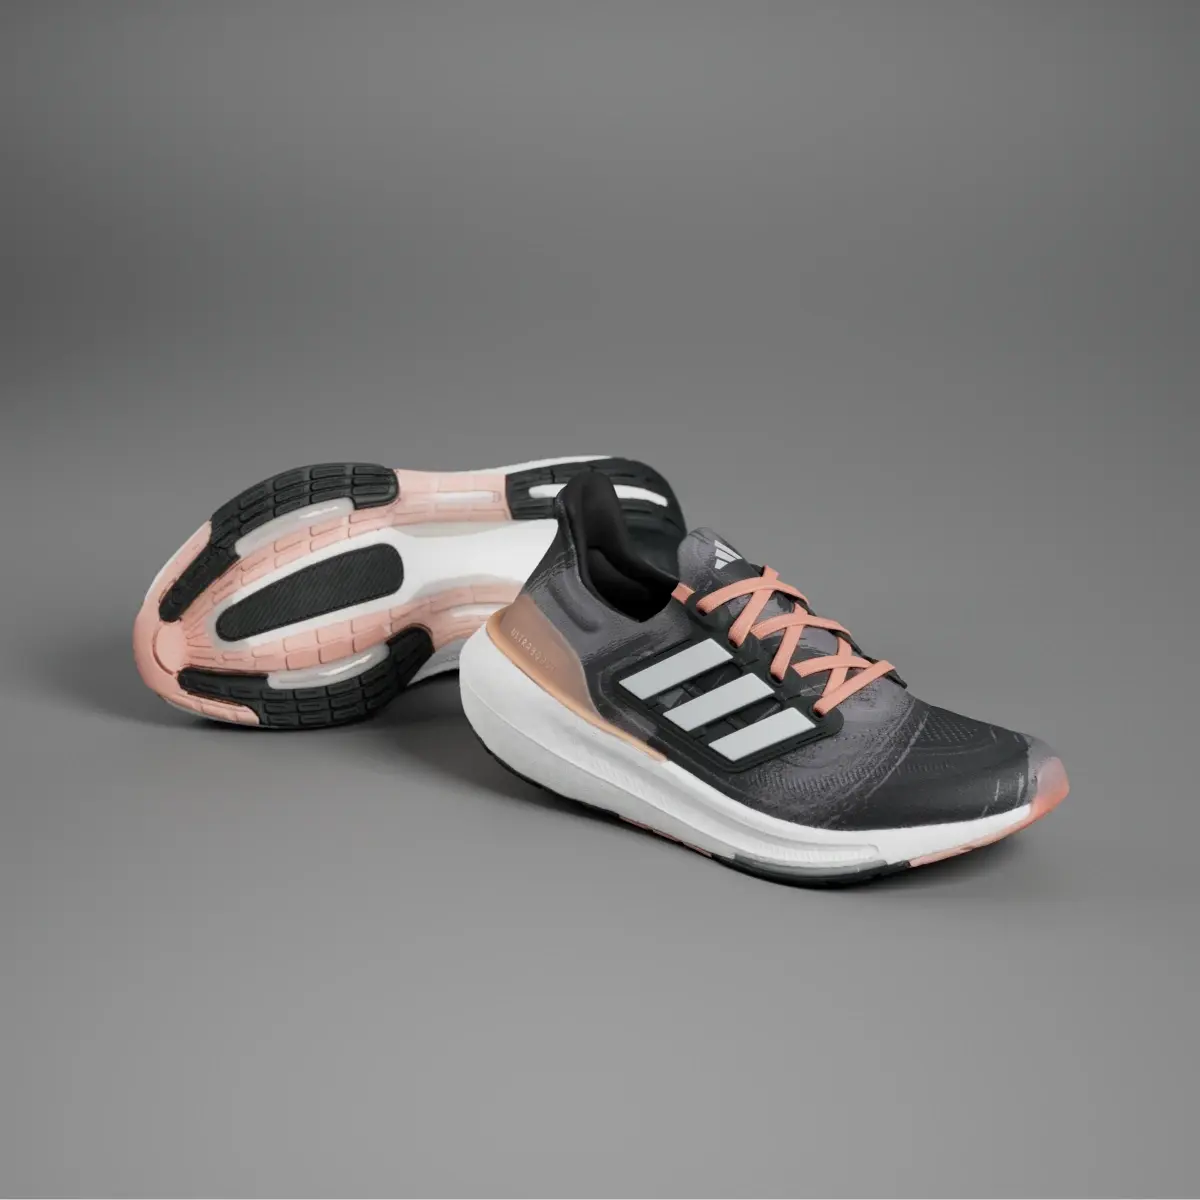 Adidas Ultraboost Light Shoes. 1